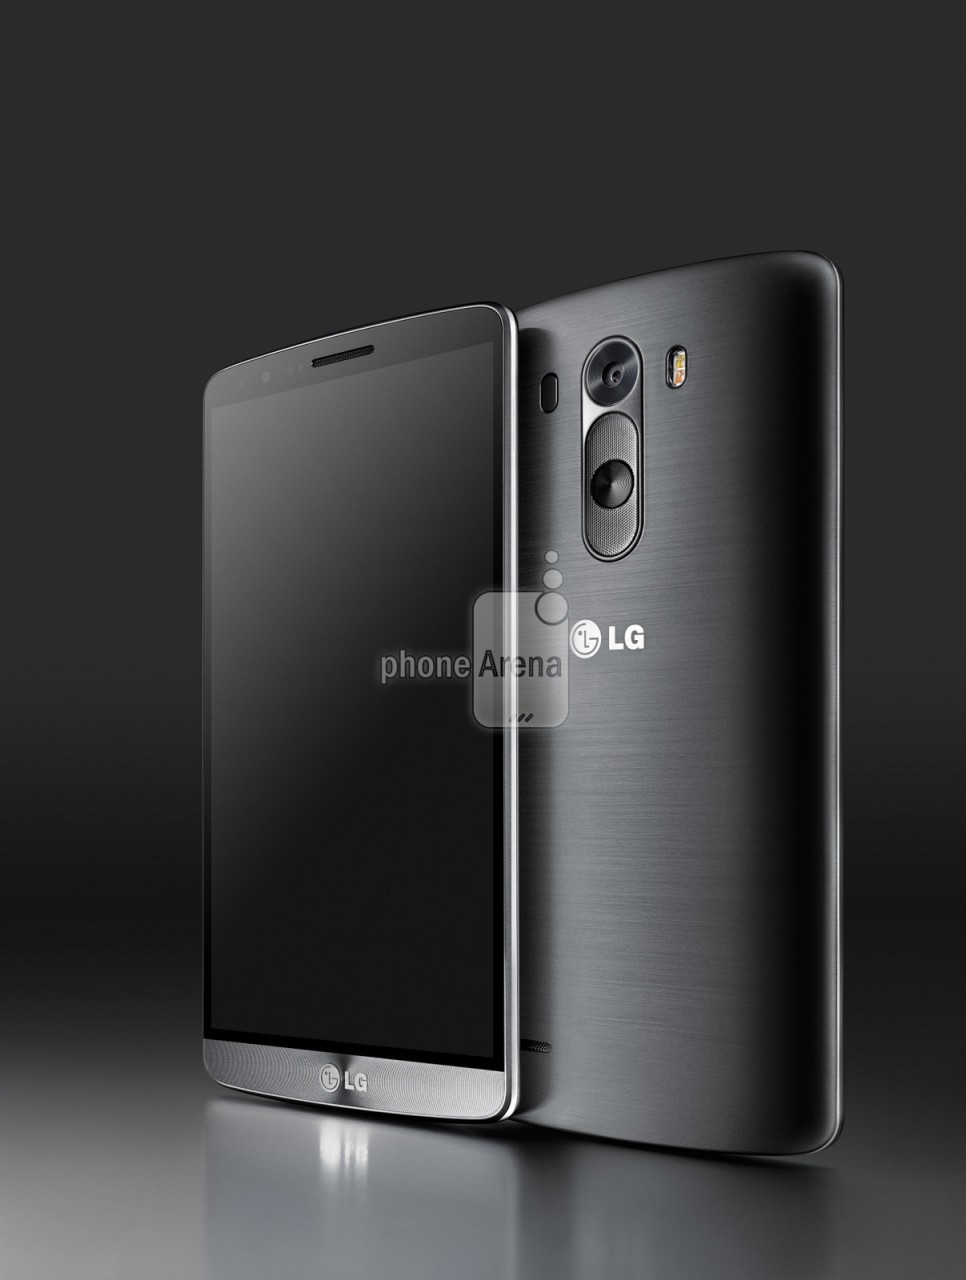 LG-G3-press-renders-appear